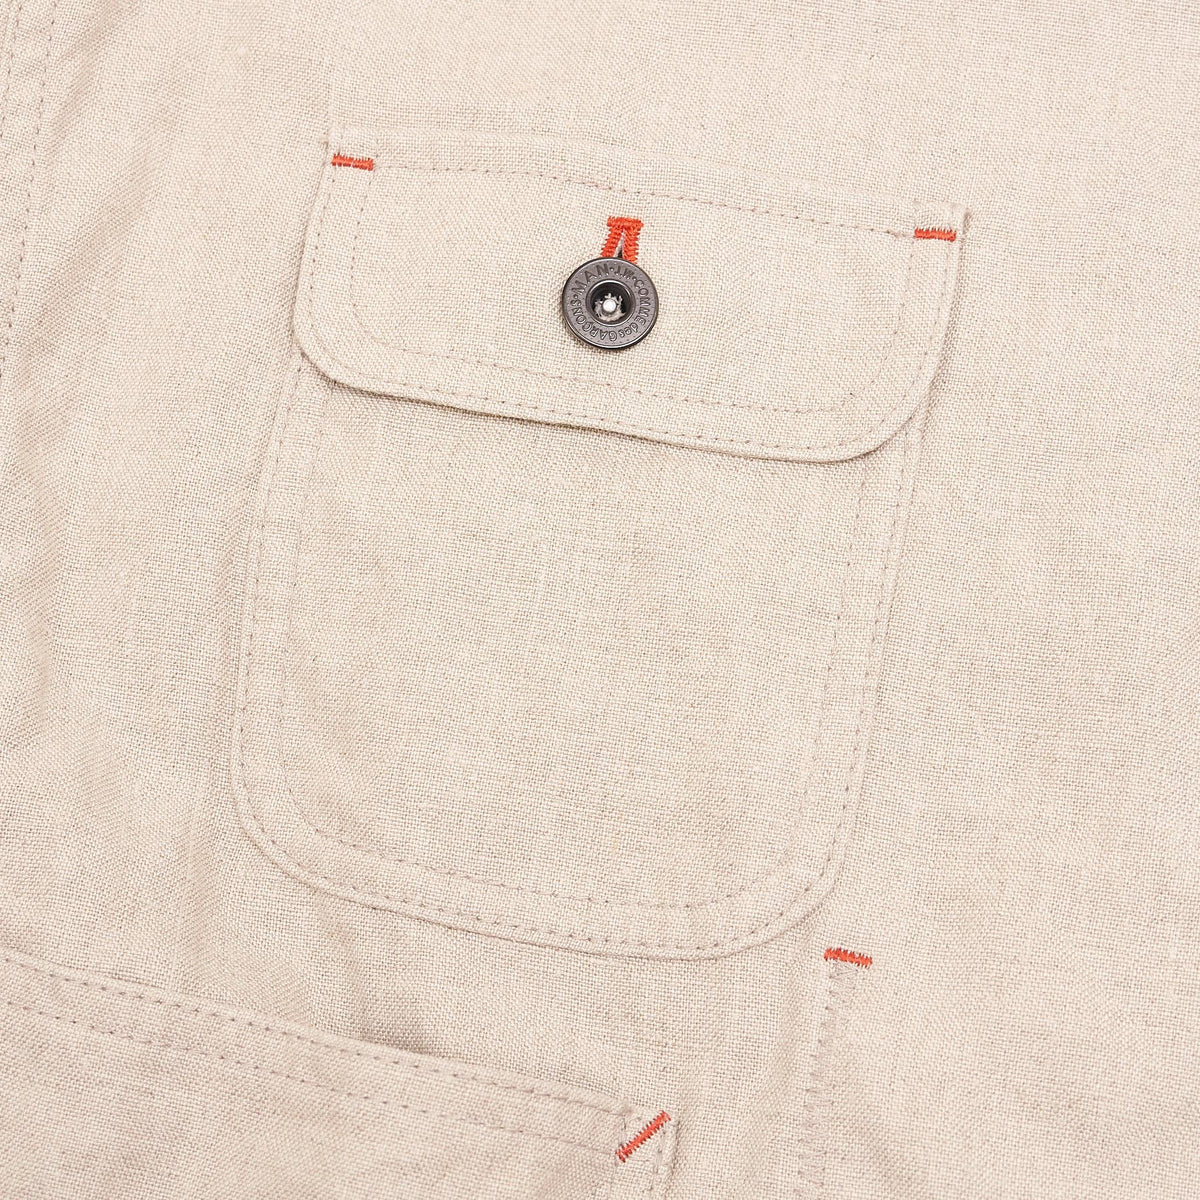 Junya Watanabe Man Reversible Four Pocket Linen Blazer Jacket